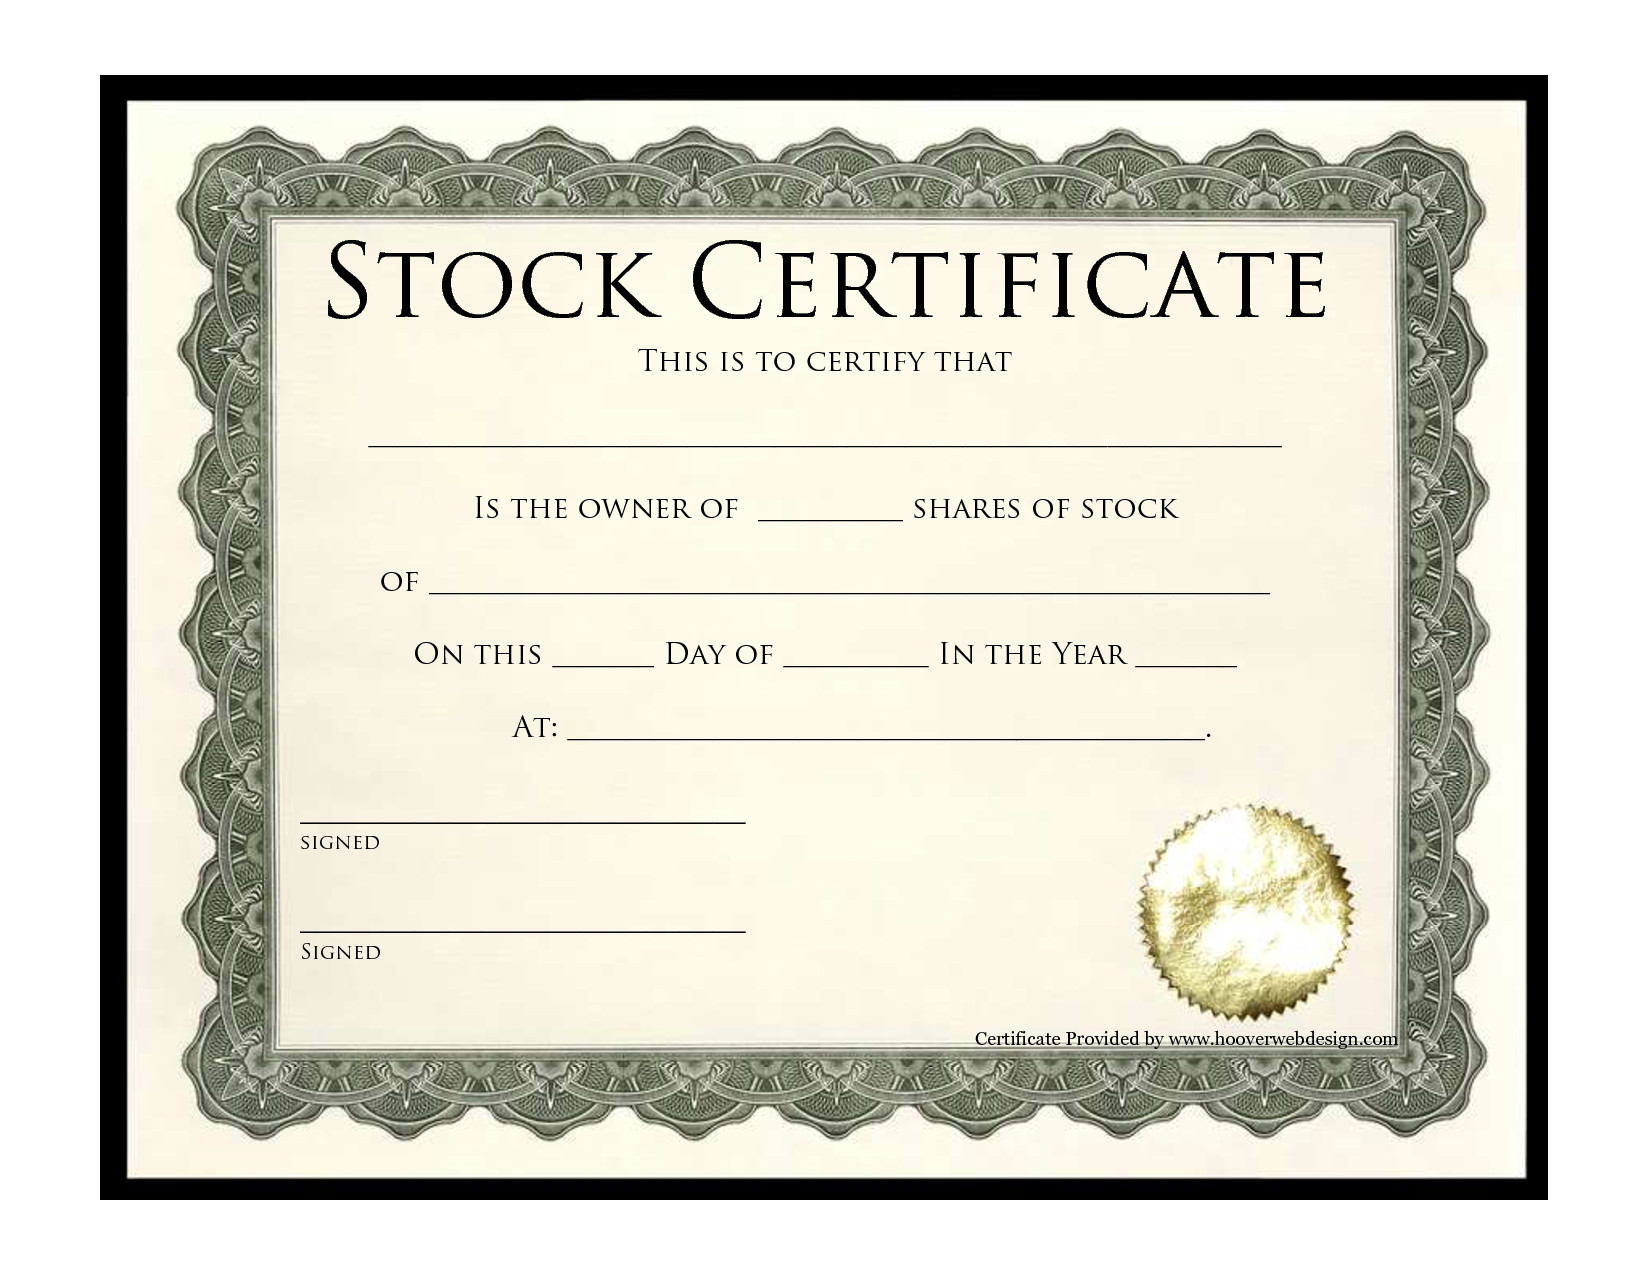 Stock Certificate Template Free 10 Certificate Templates